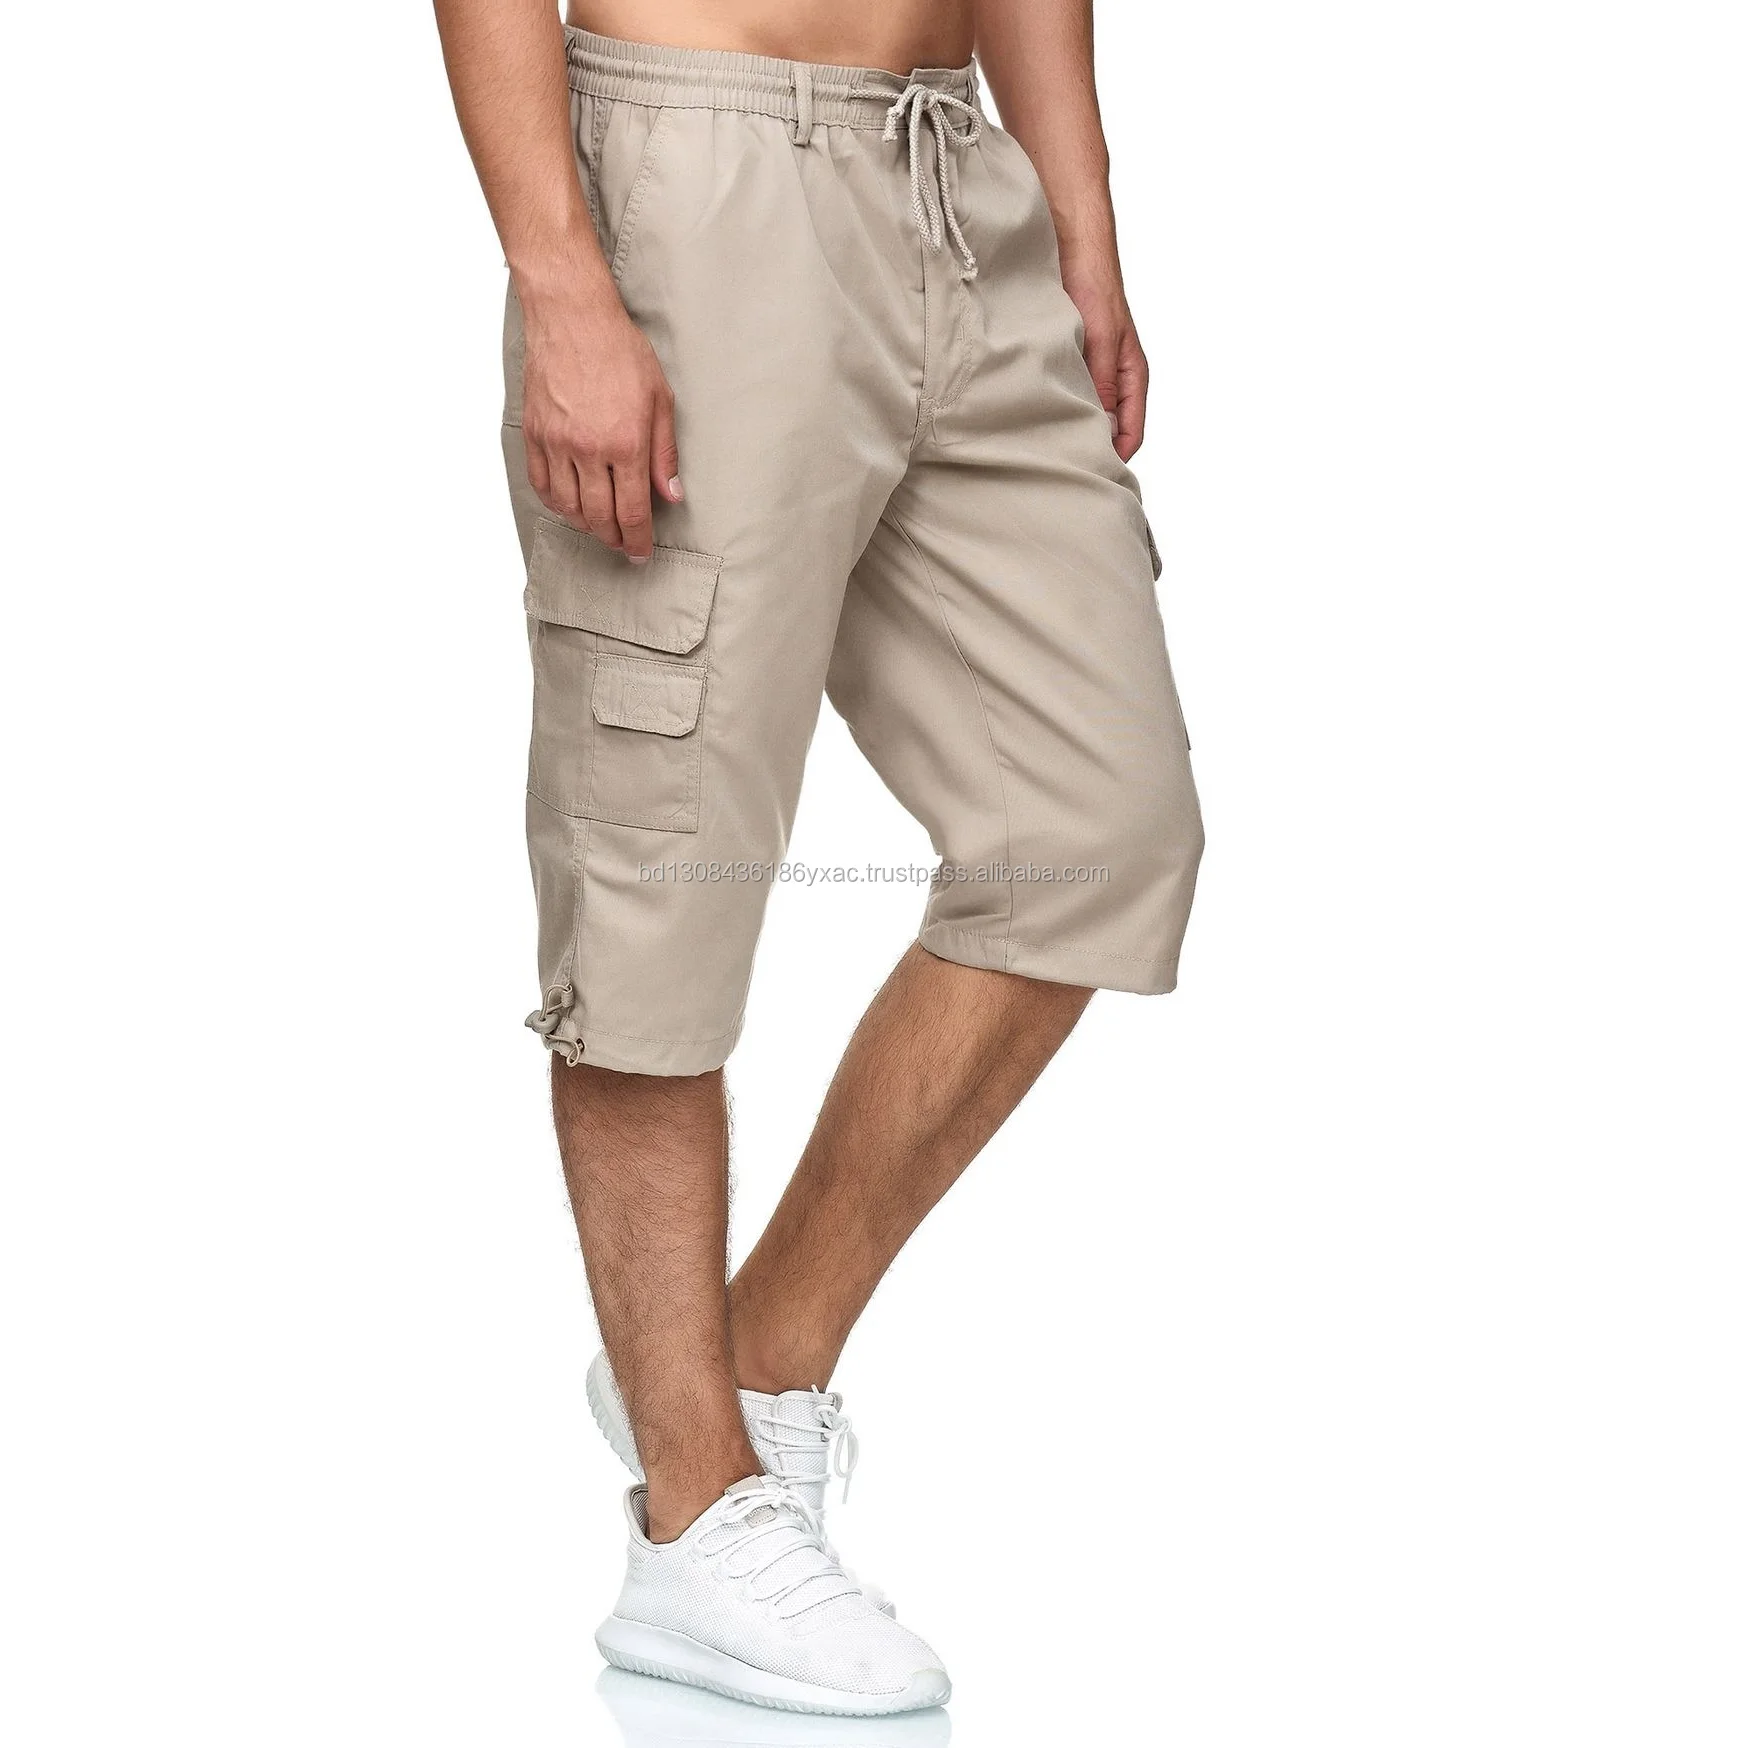 Buy Reoutlook Cotton 34th Long Cargo Shorts for Men Black at Amazonin